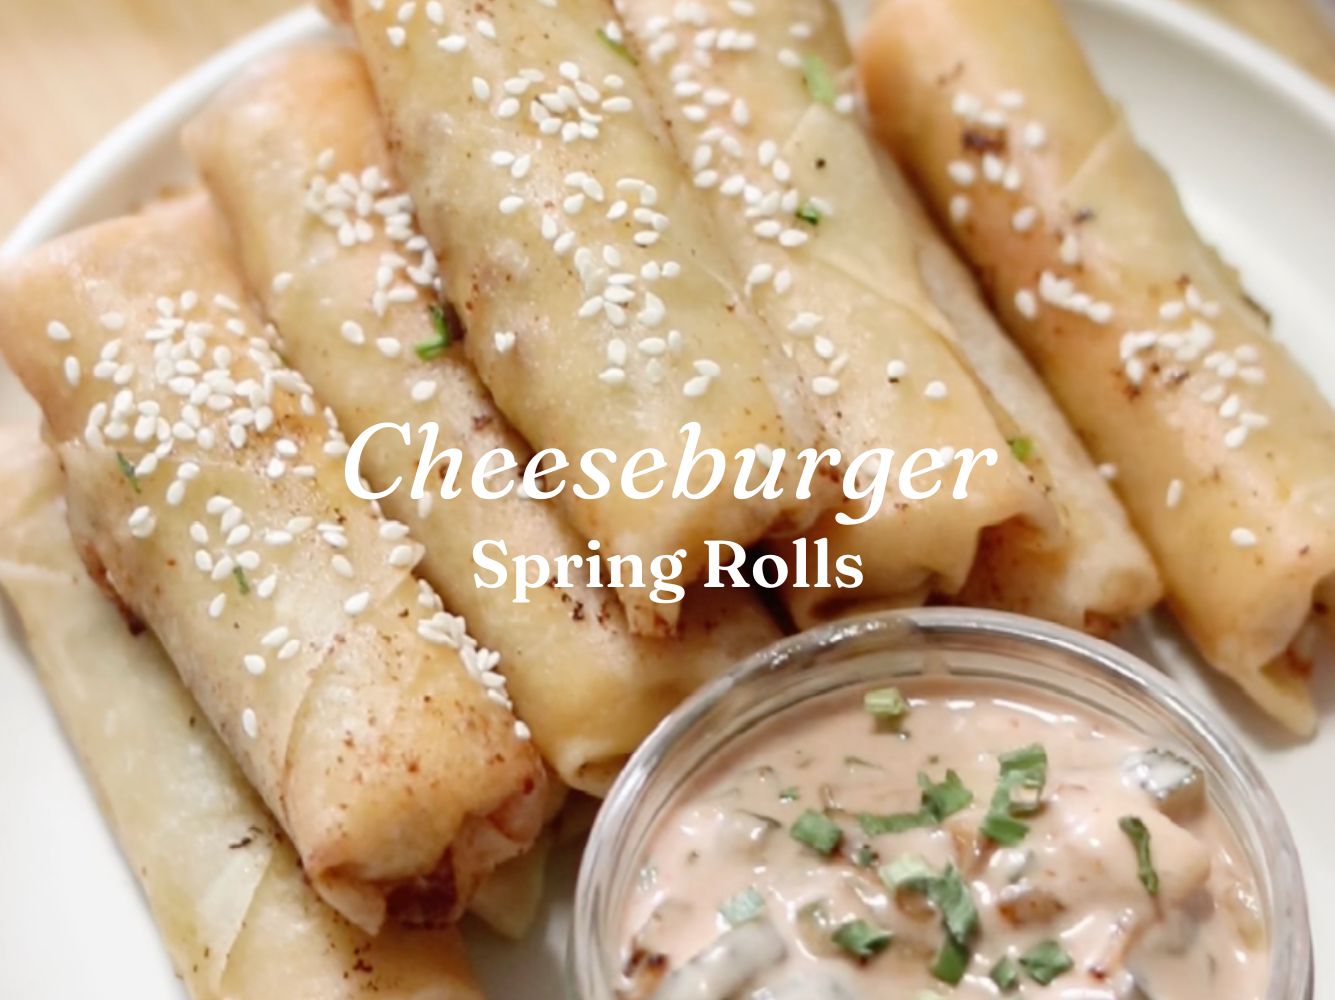 Epic Cheeseburger Spring Rolls